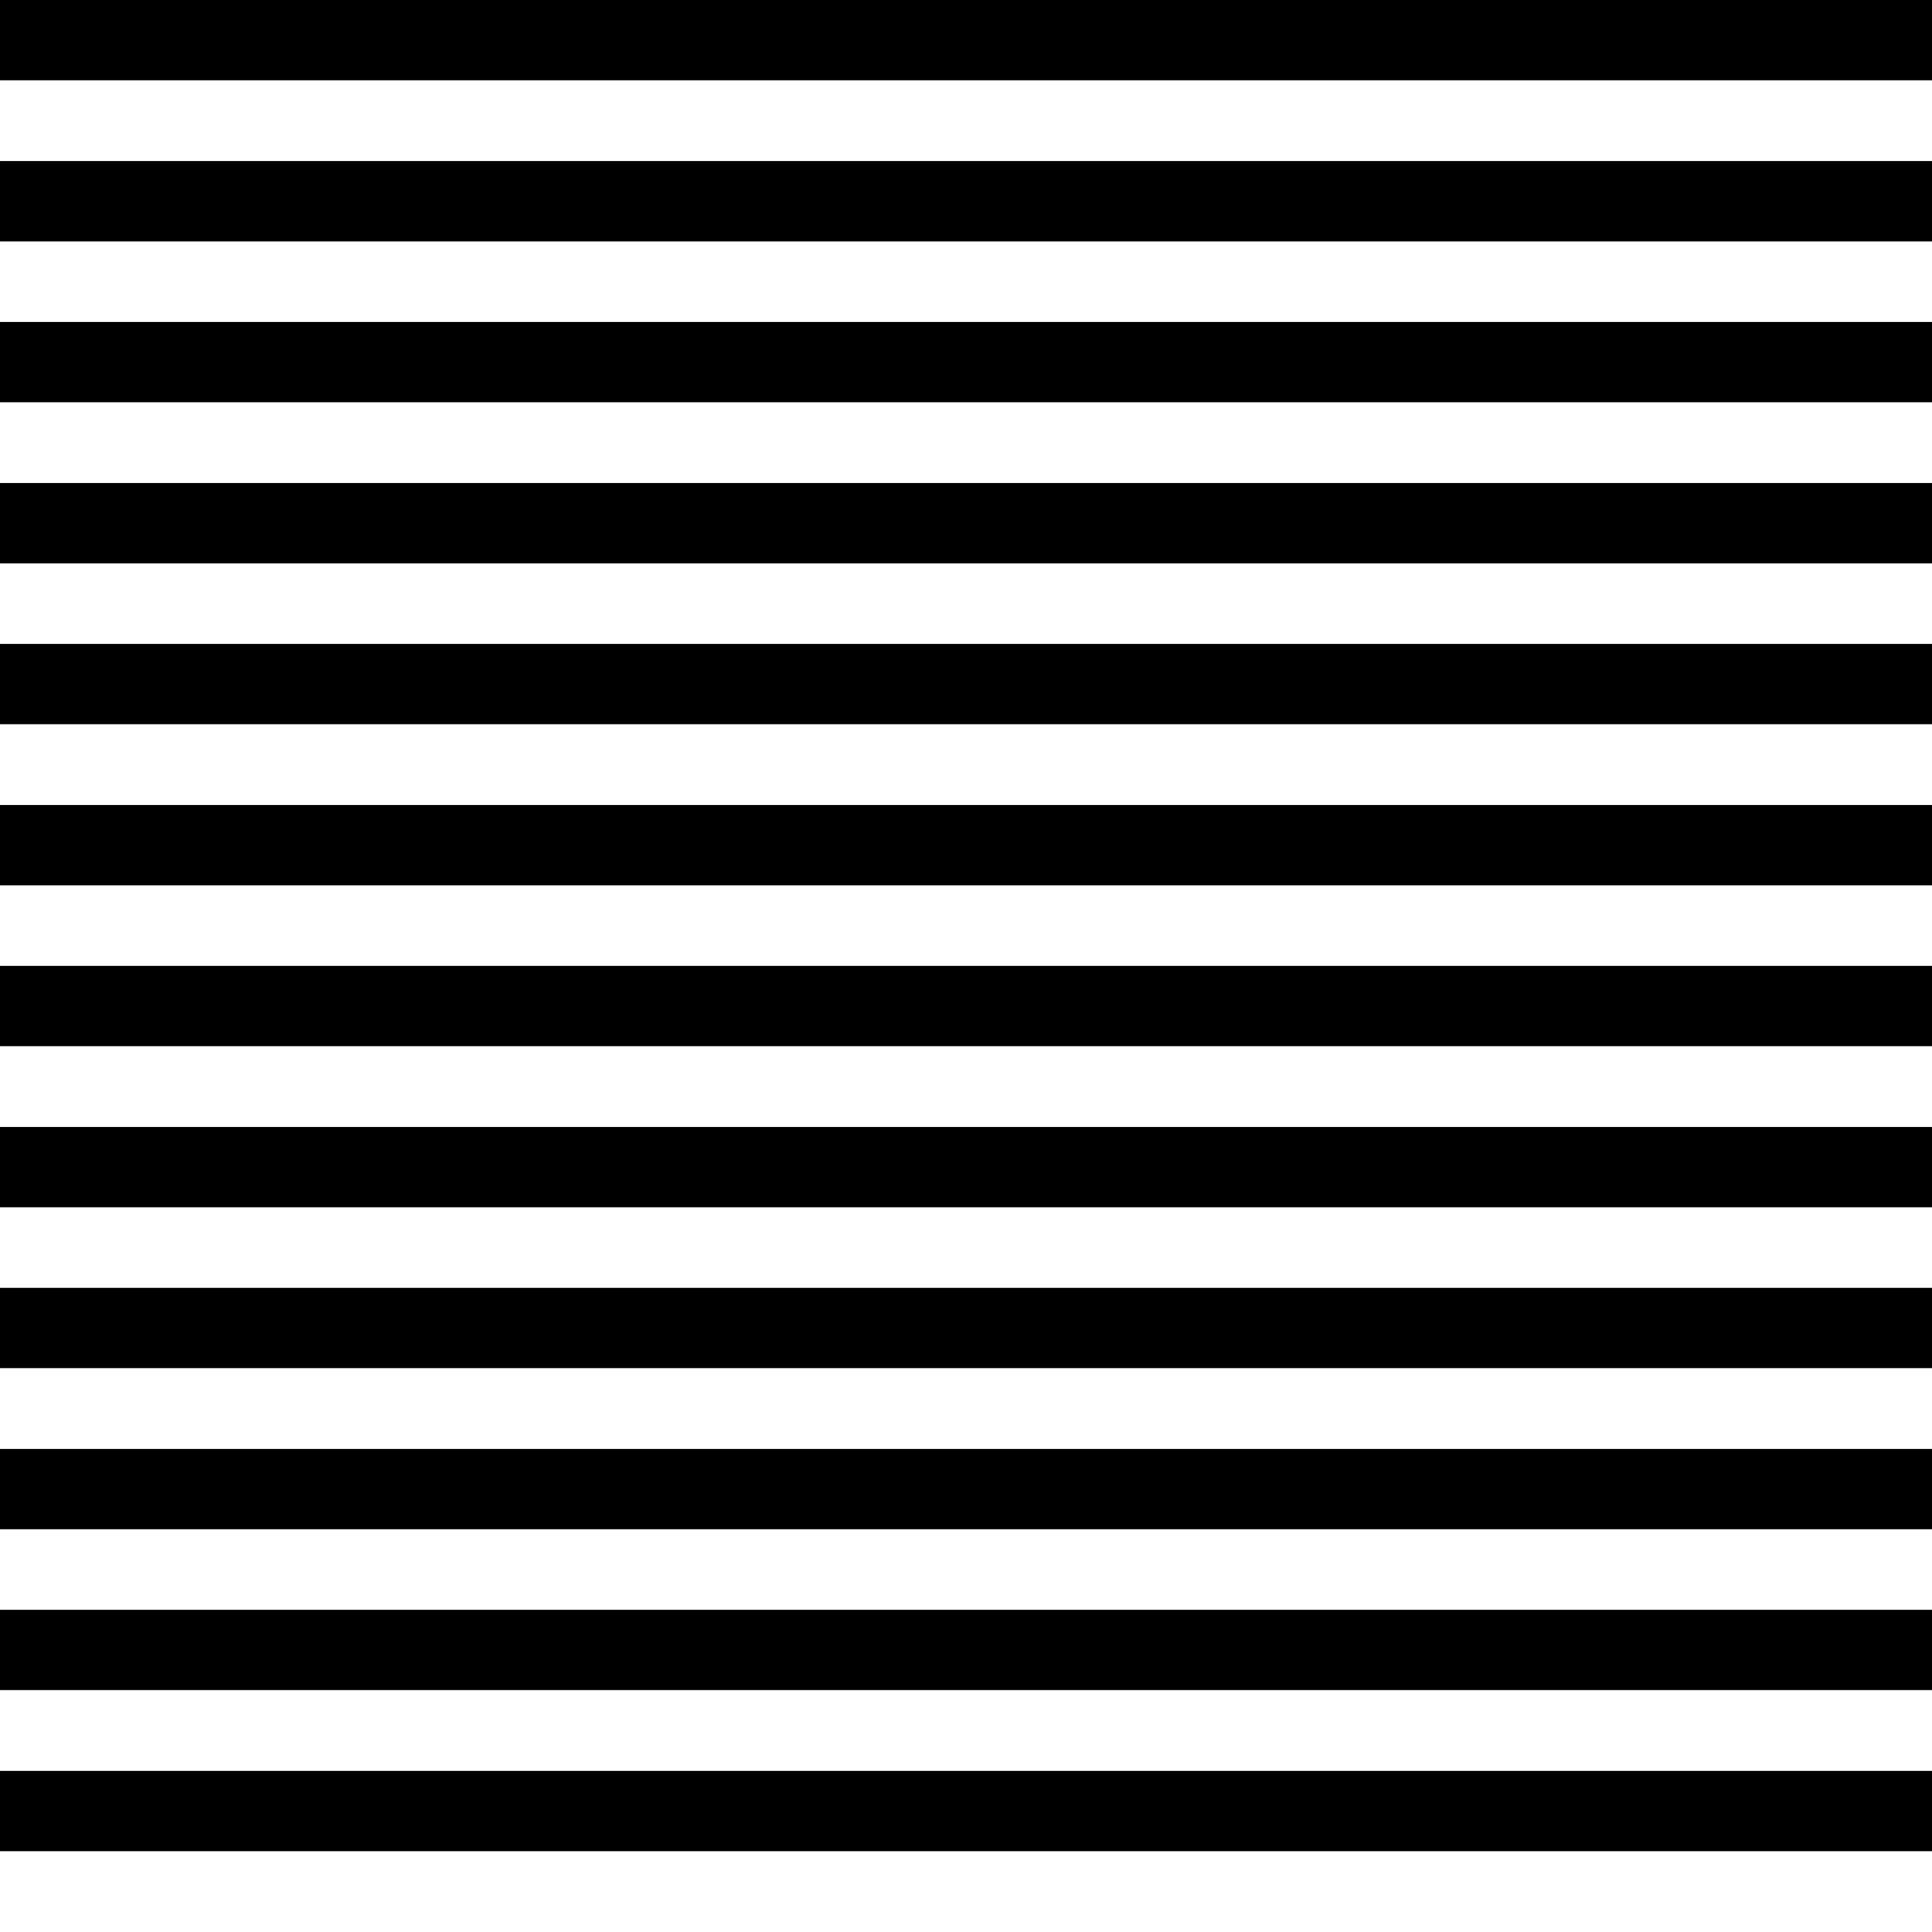 black-and-white-striped-pattern-free-clip-art